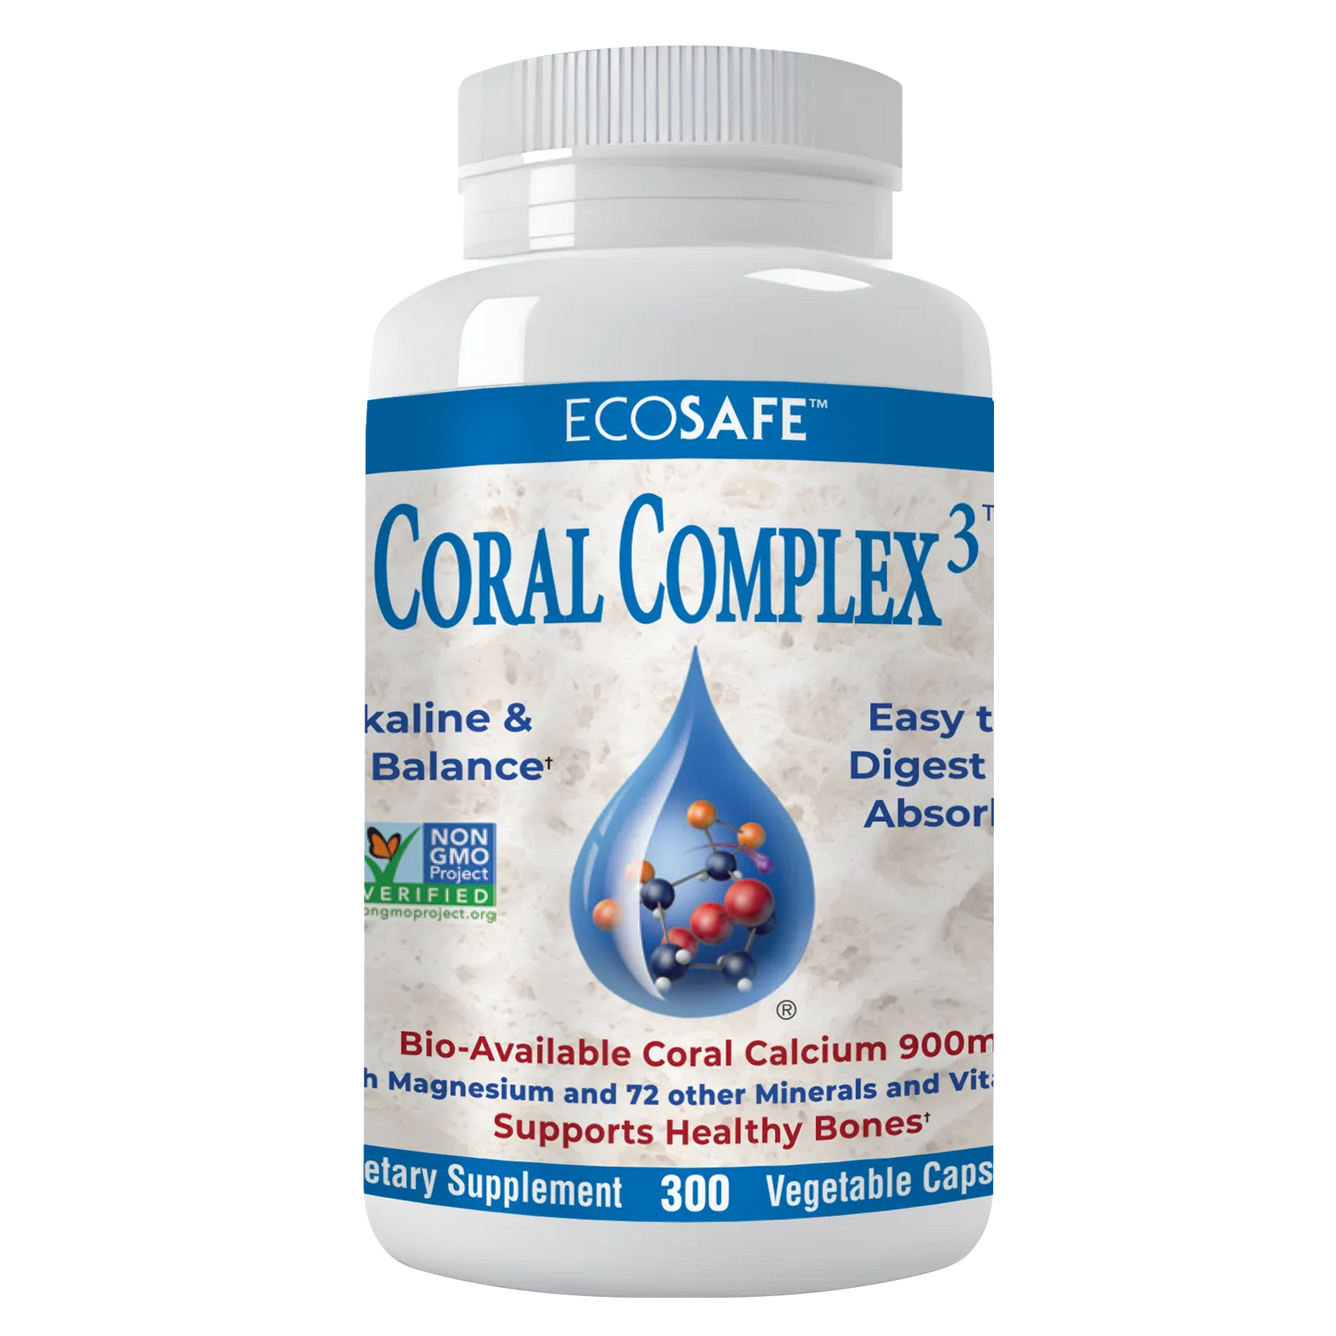 Coral Complex³ Natural Coral Calcium Supplement